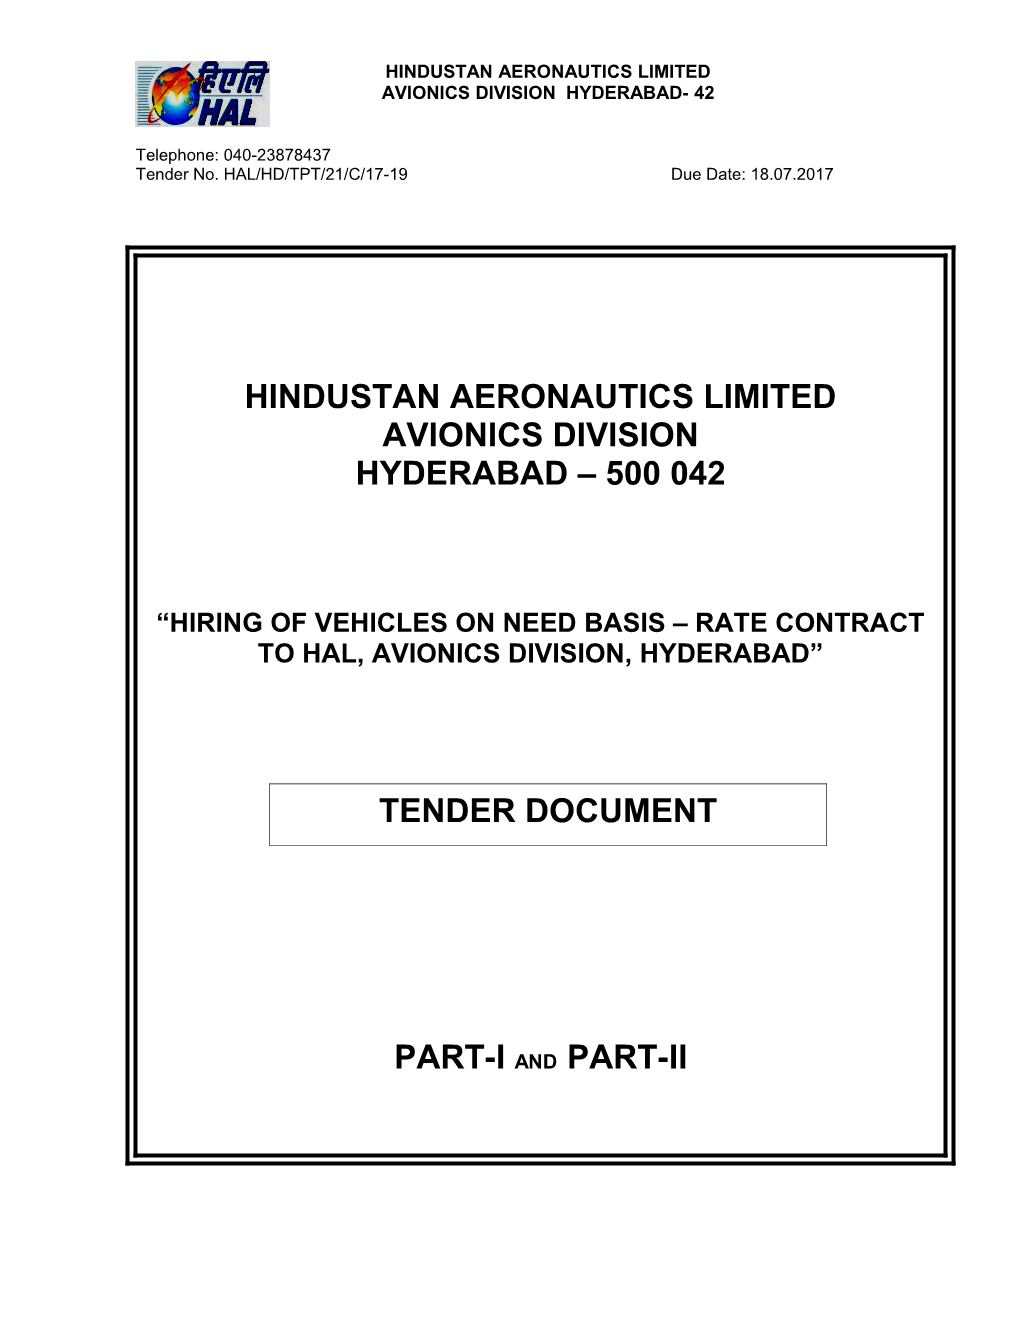 Avionics Division Hyderabad-42